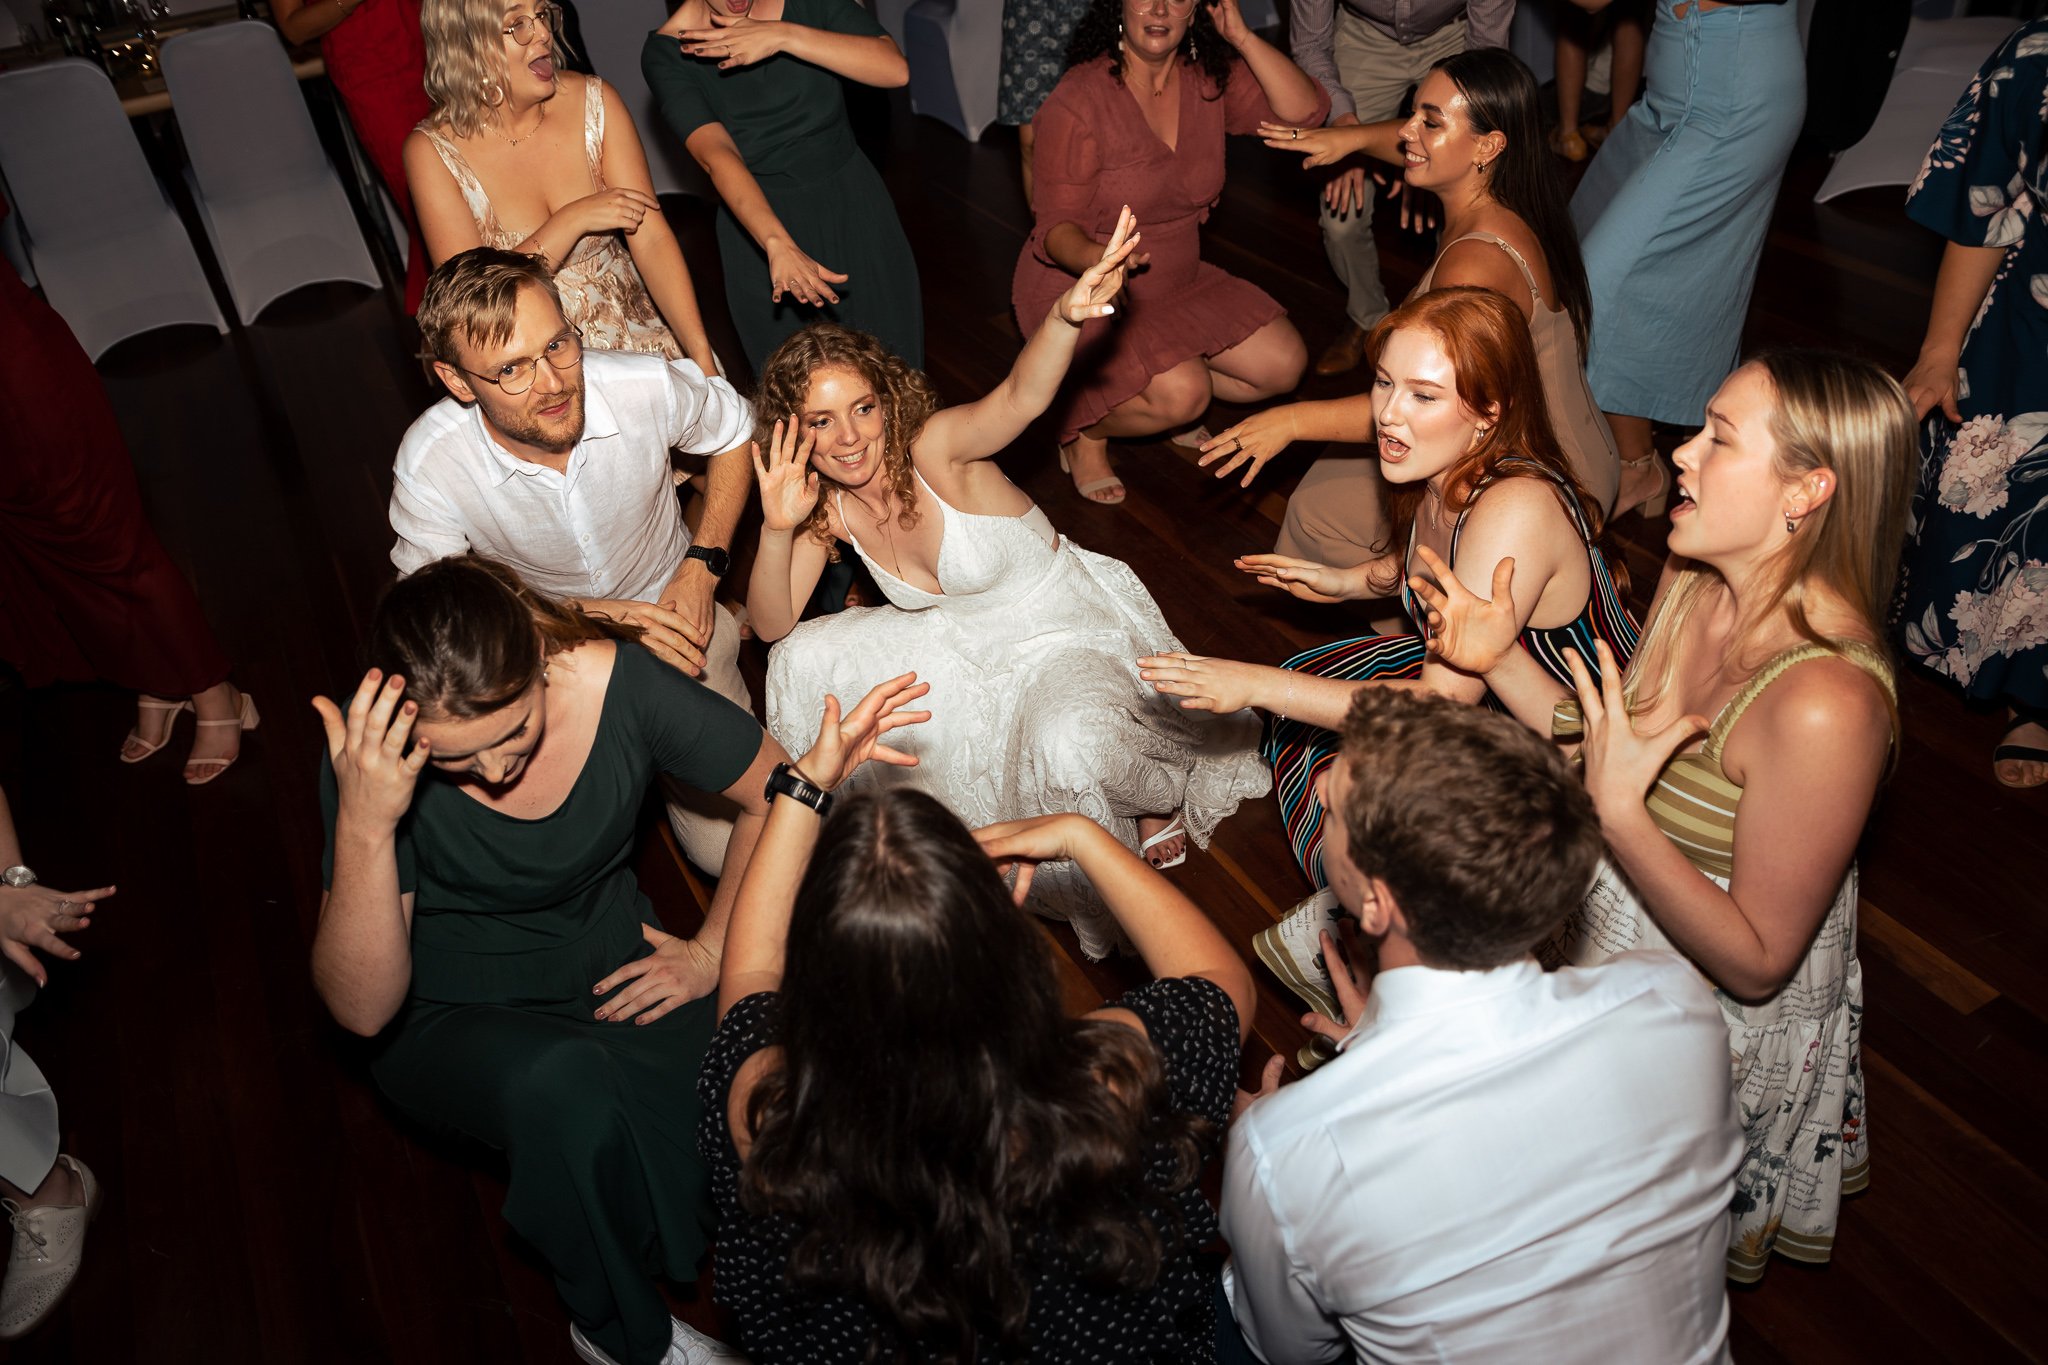 Dancefloor photos from a Sydney Wedding taken by a Sydney Wedding Photographer